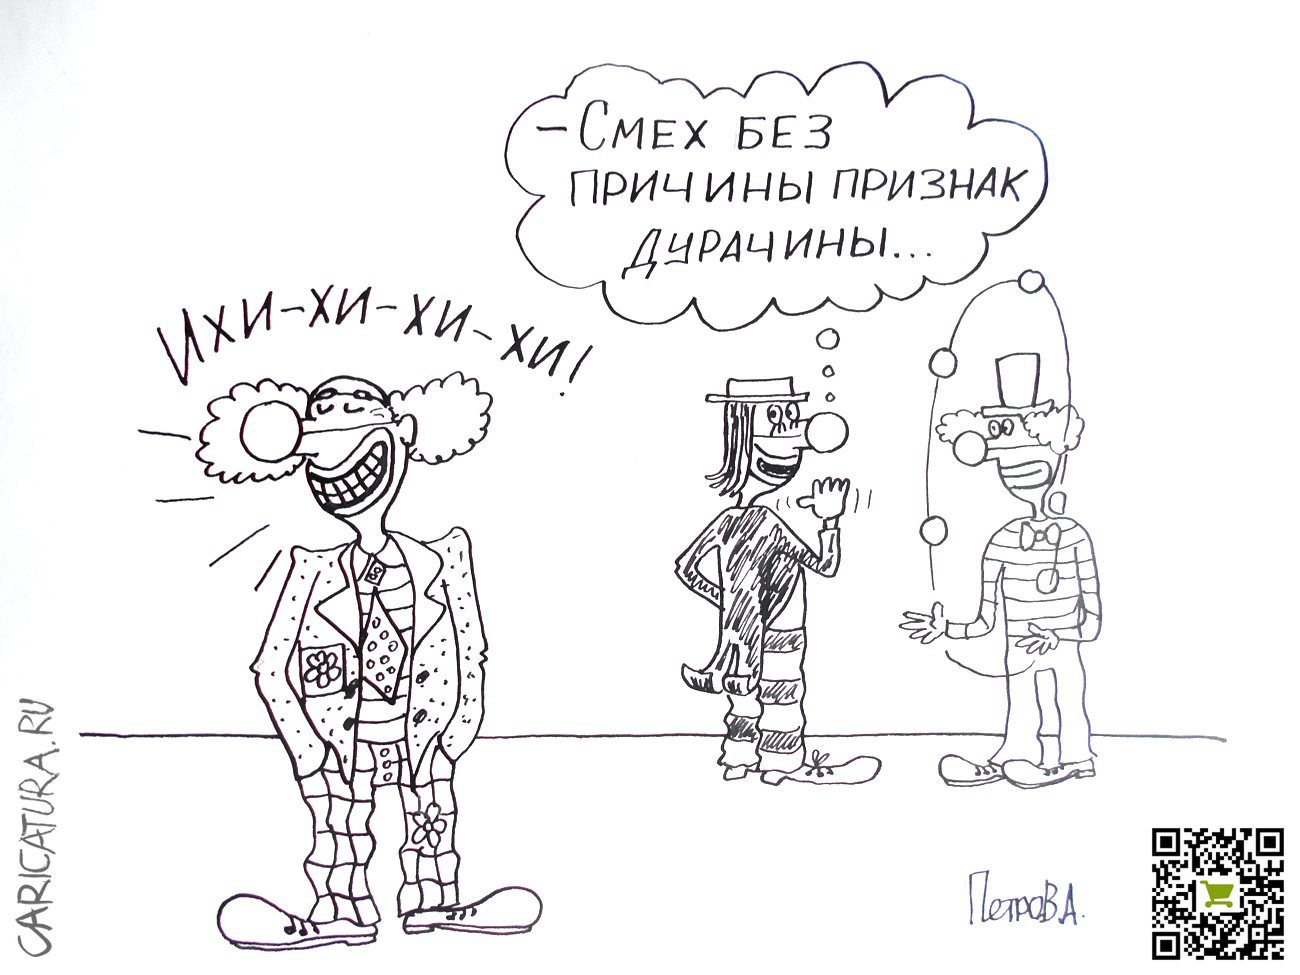 Карикатура "Дурачина", Александр Петров